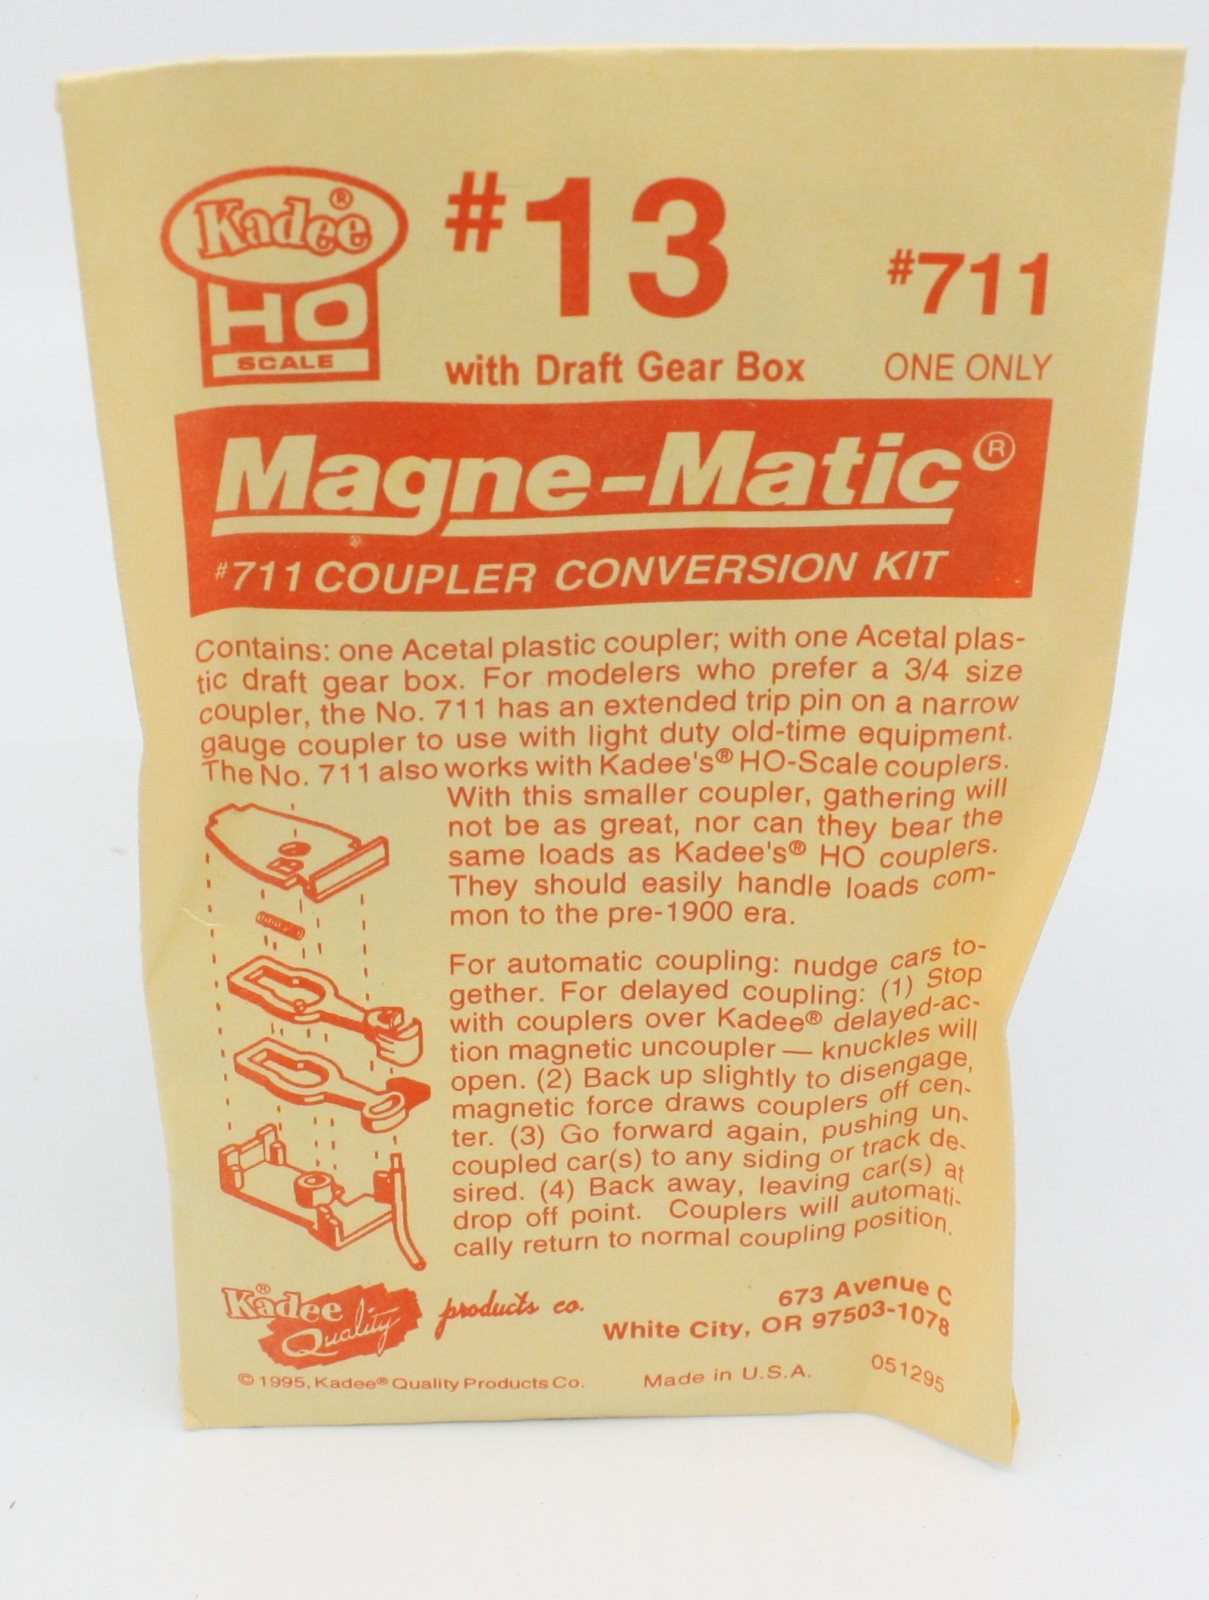 Kadee 13 HO #711 Mange-Matic Coupler Conversion Kit